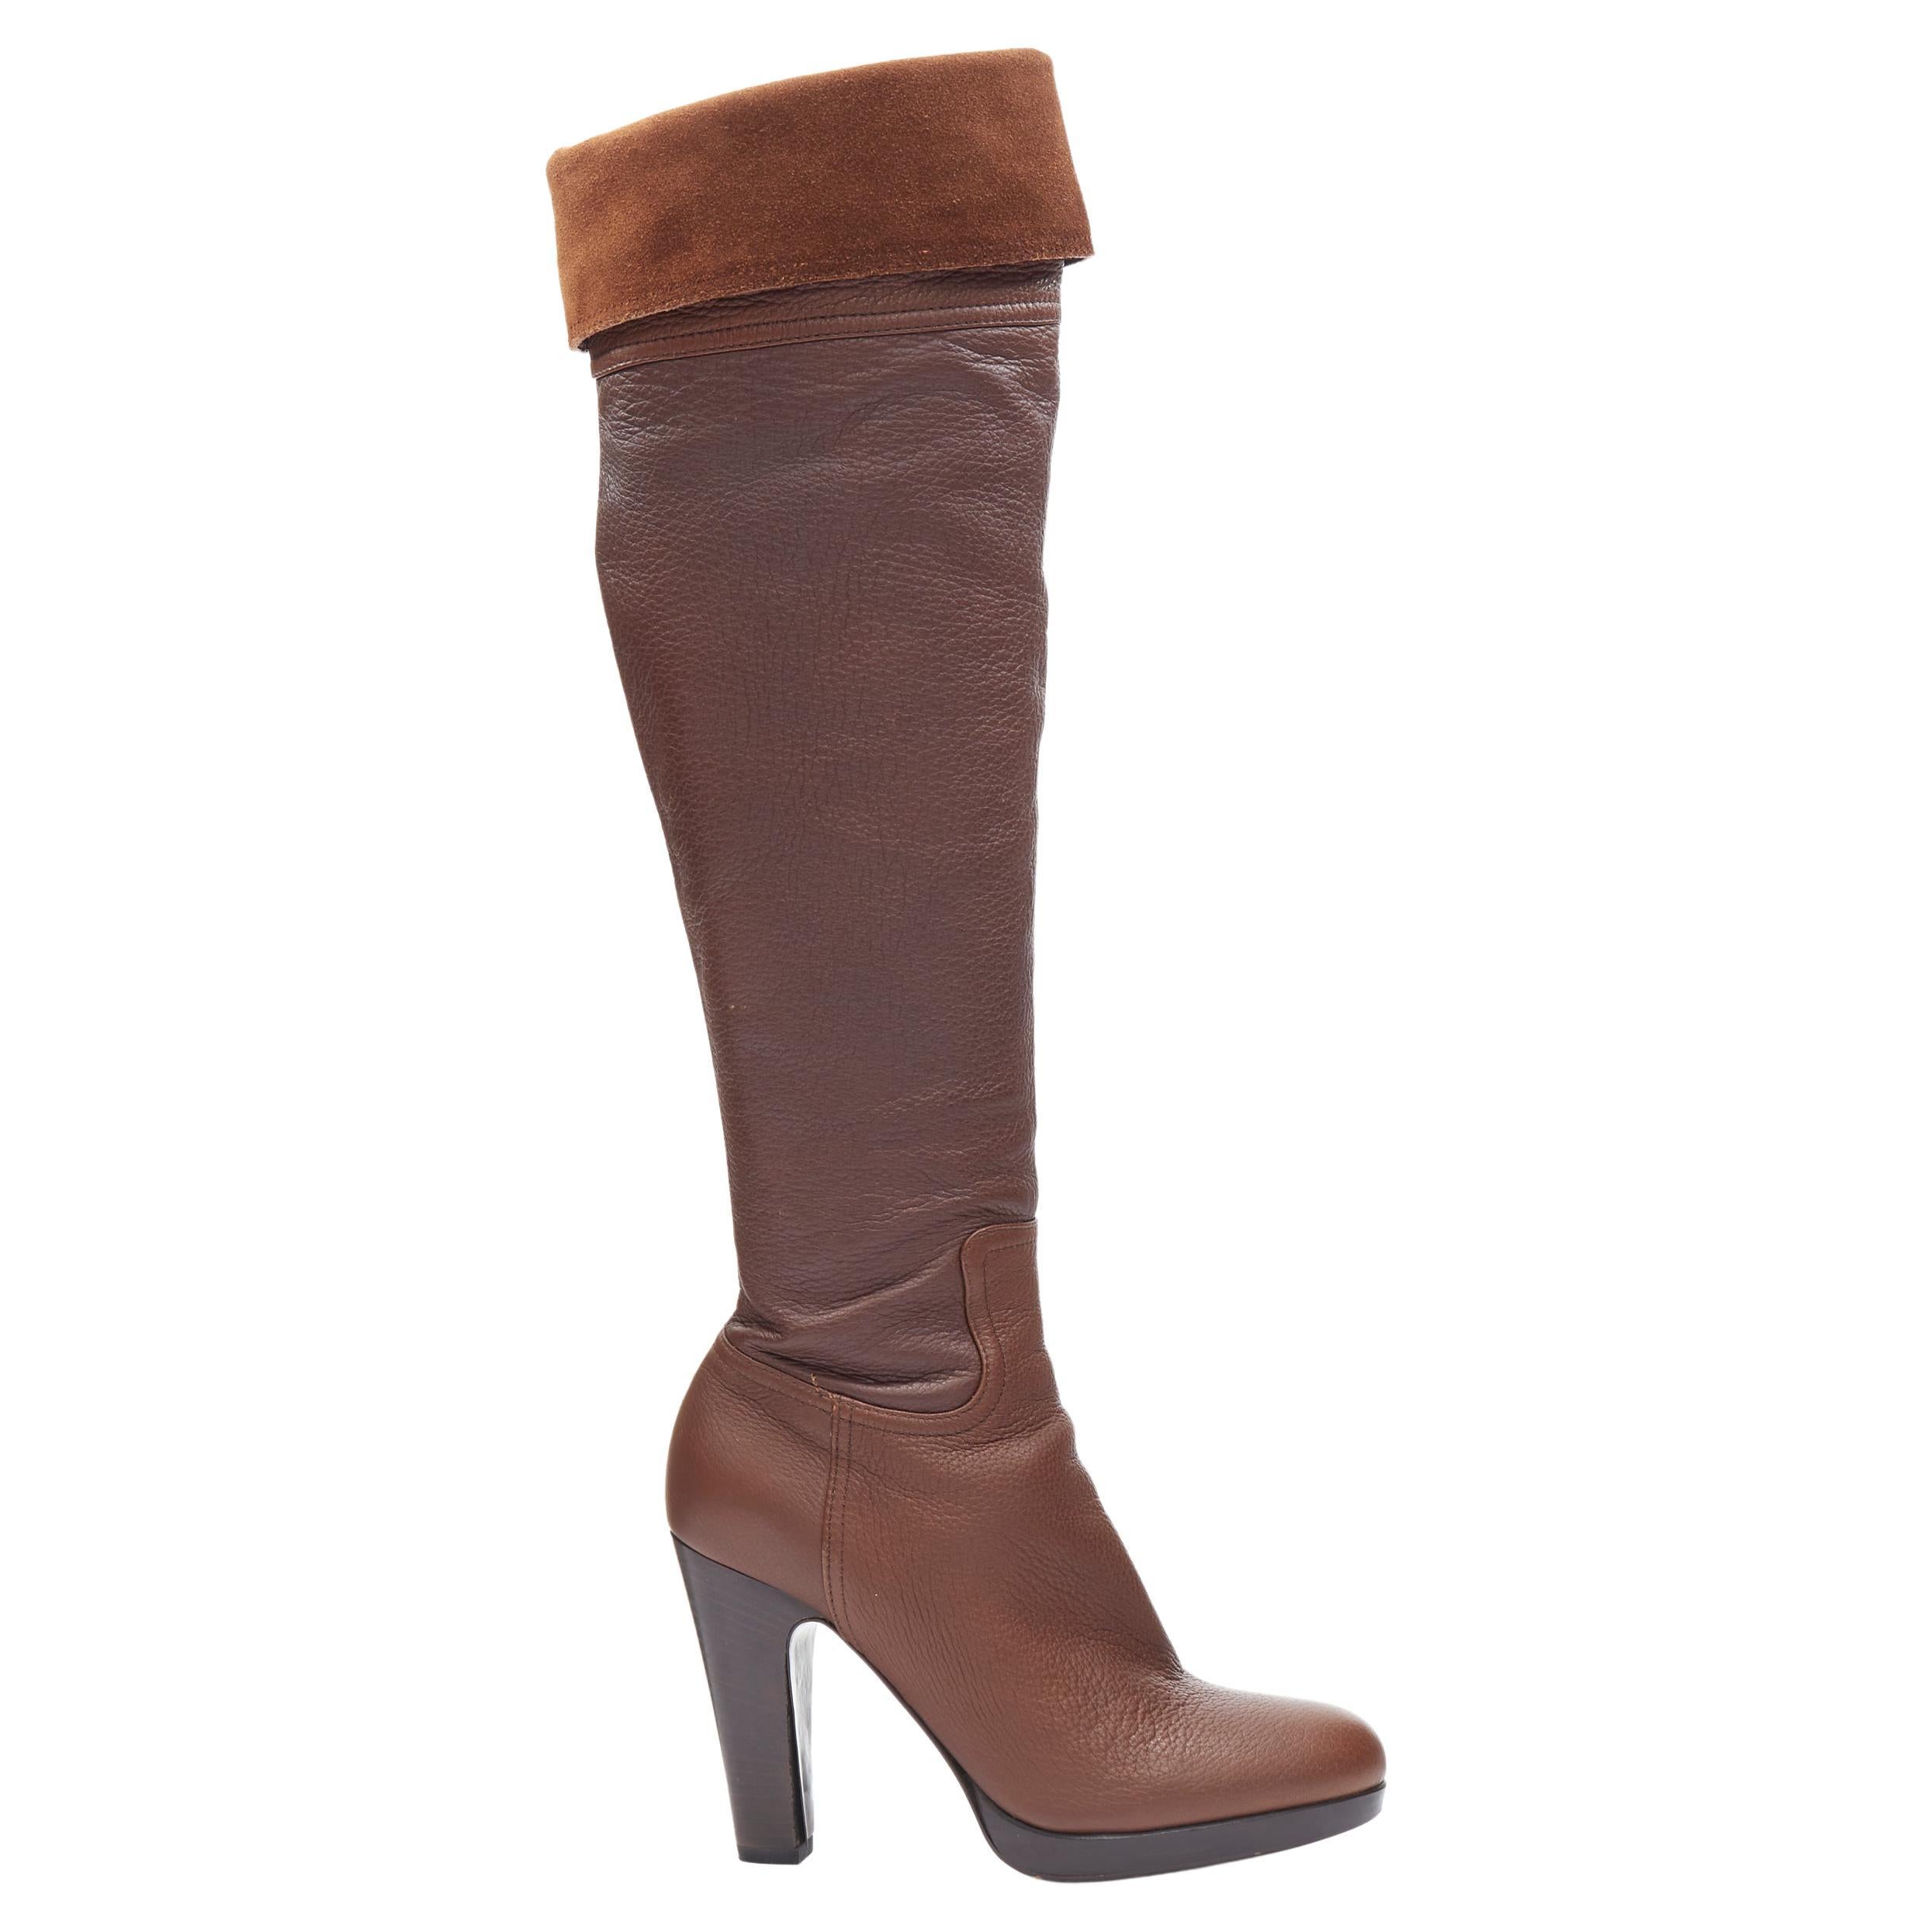 MIU MIU dark brown leather suede foldover wooden heel platofrm tall boot EU37.5